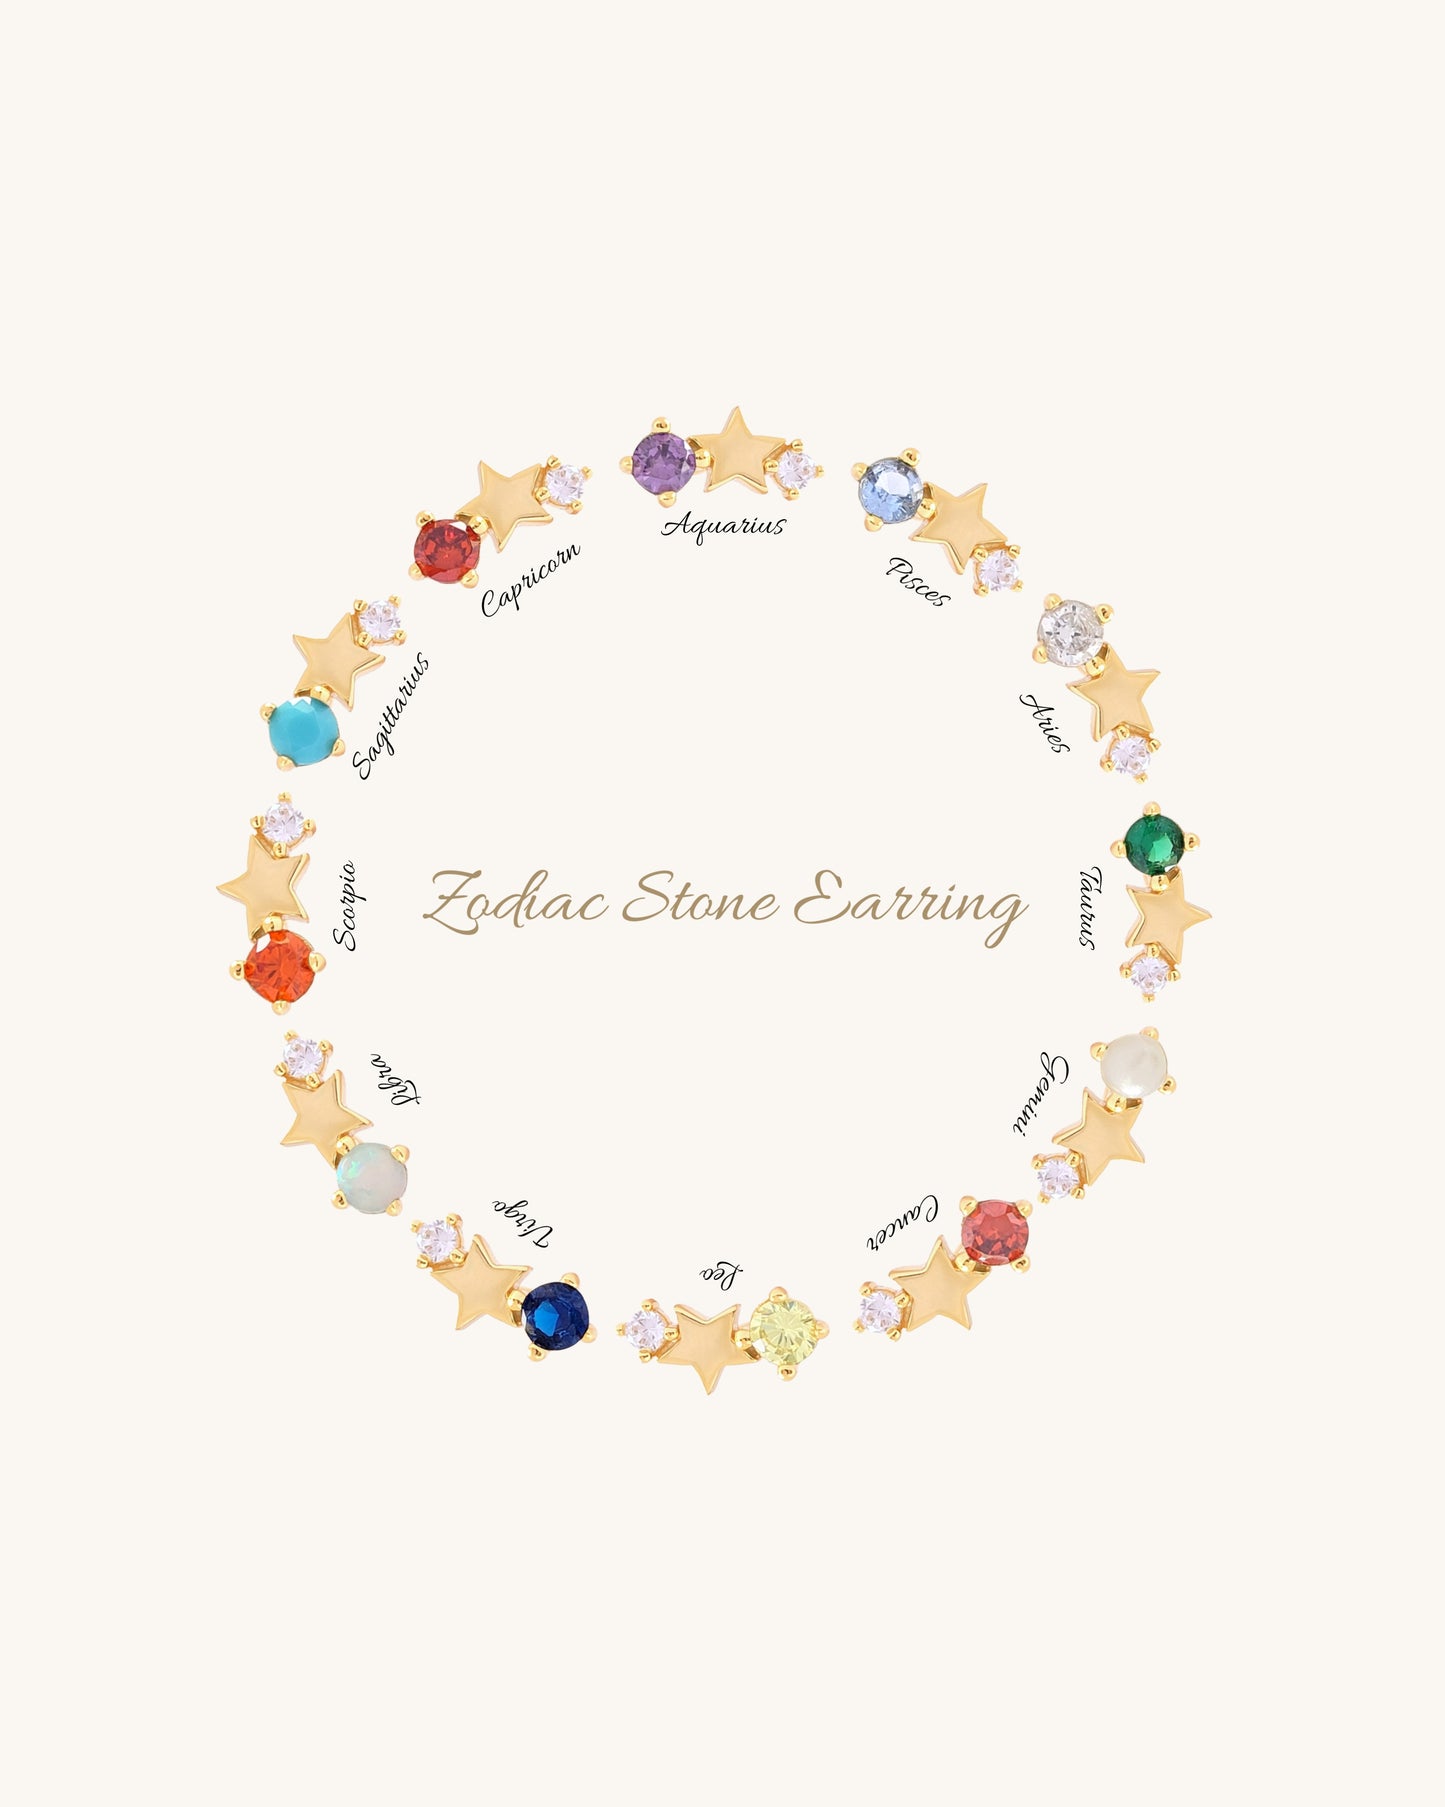 Aries jewellery: Star Zodiac Constellation Earring